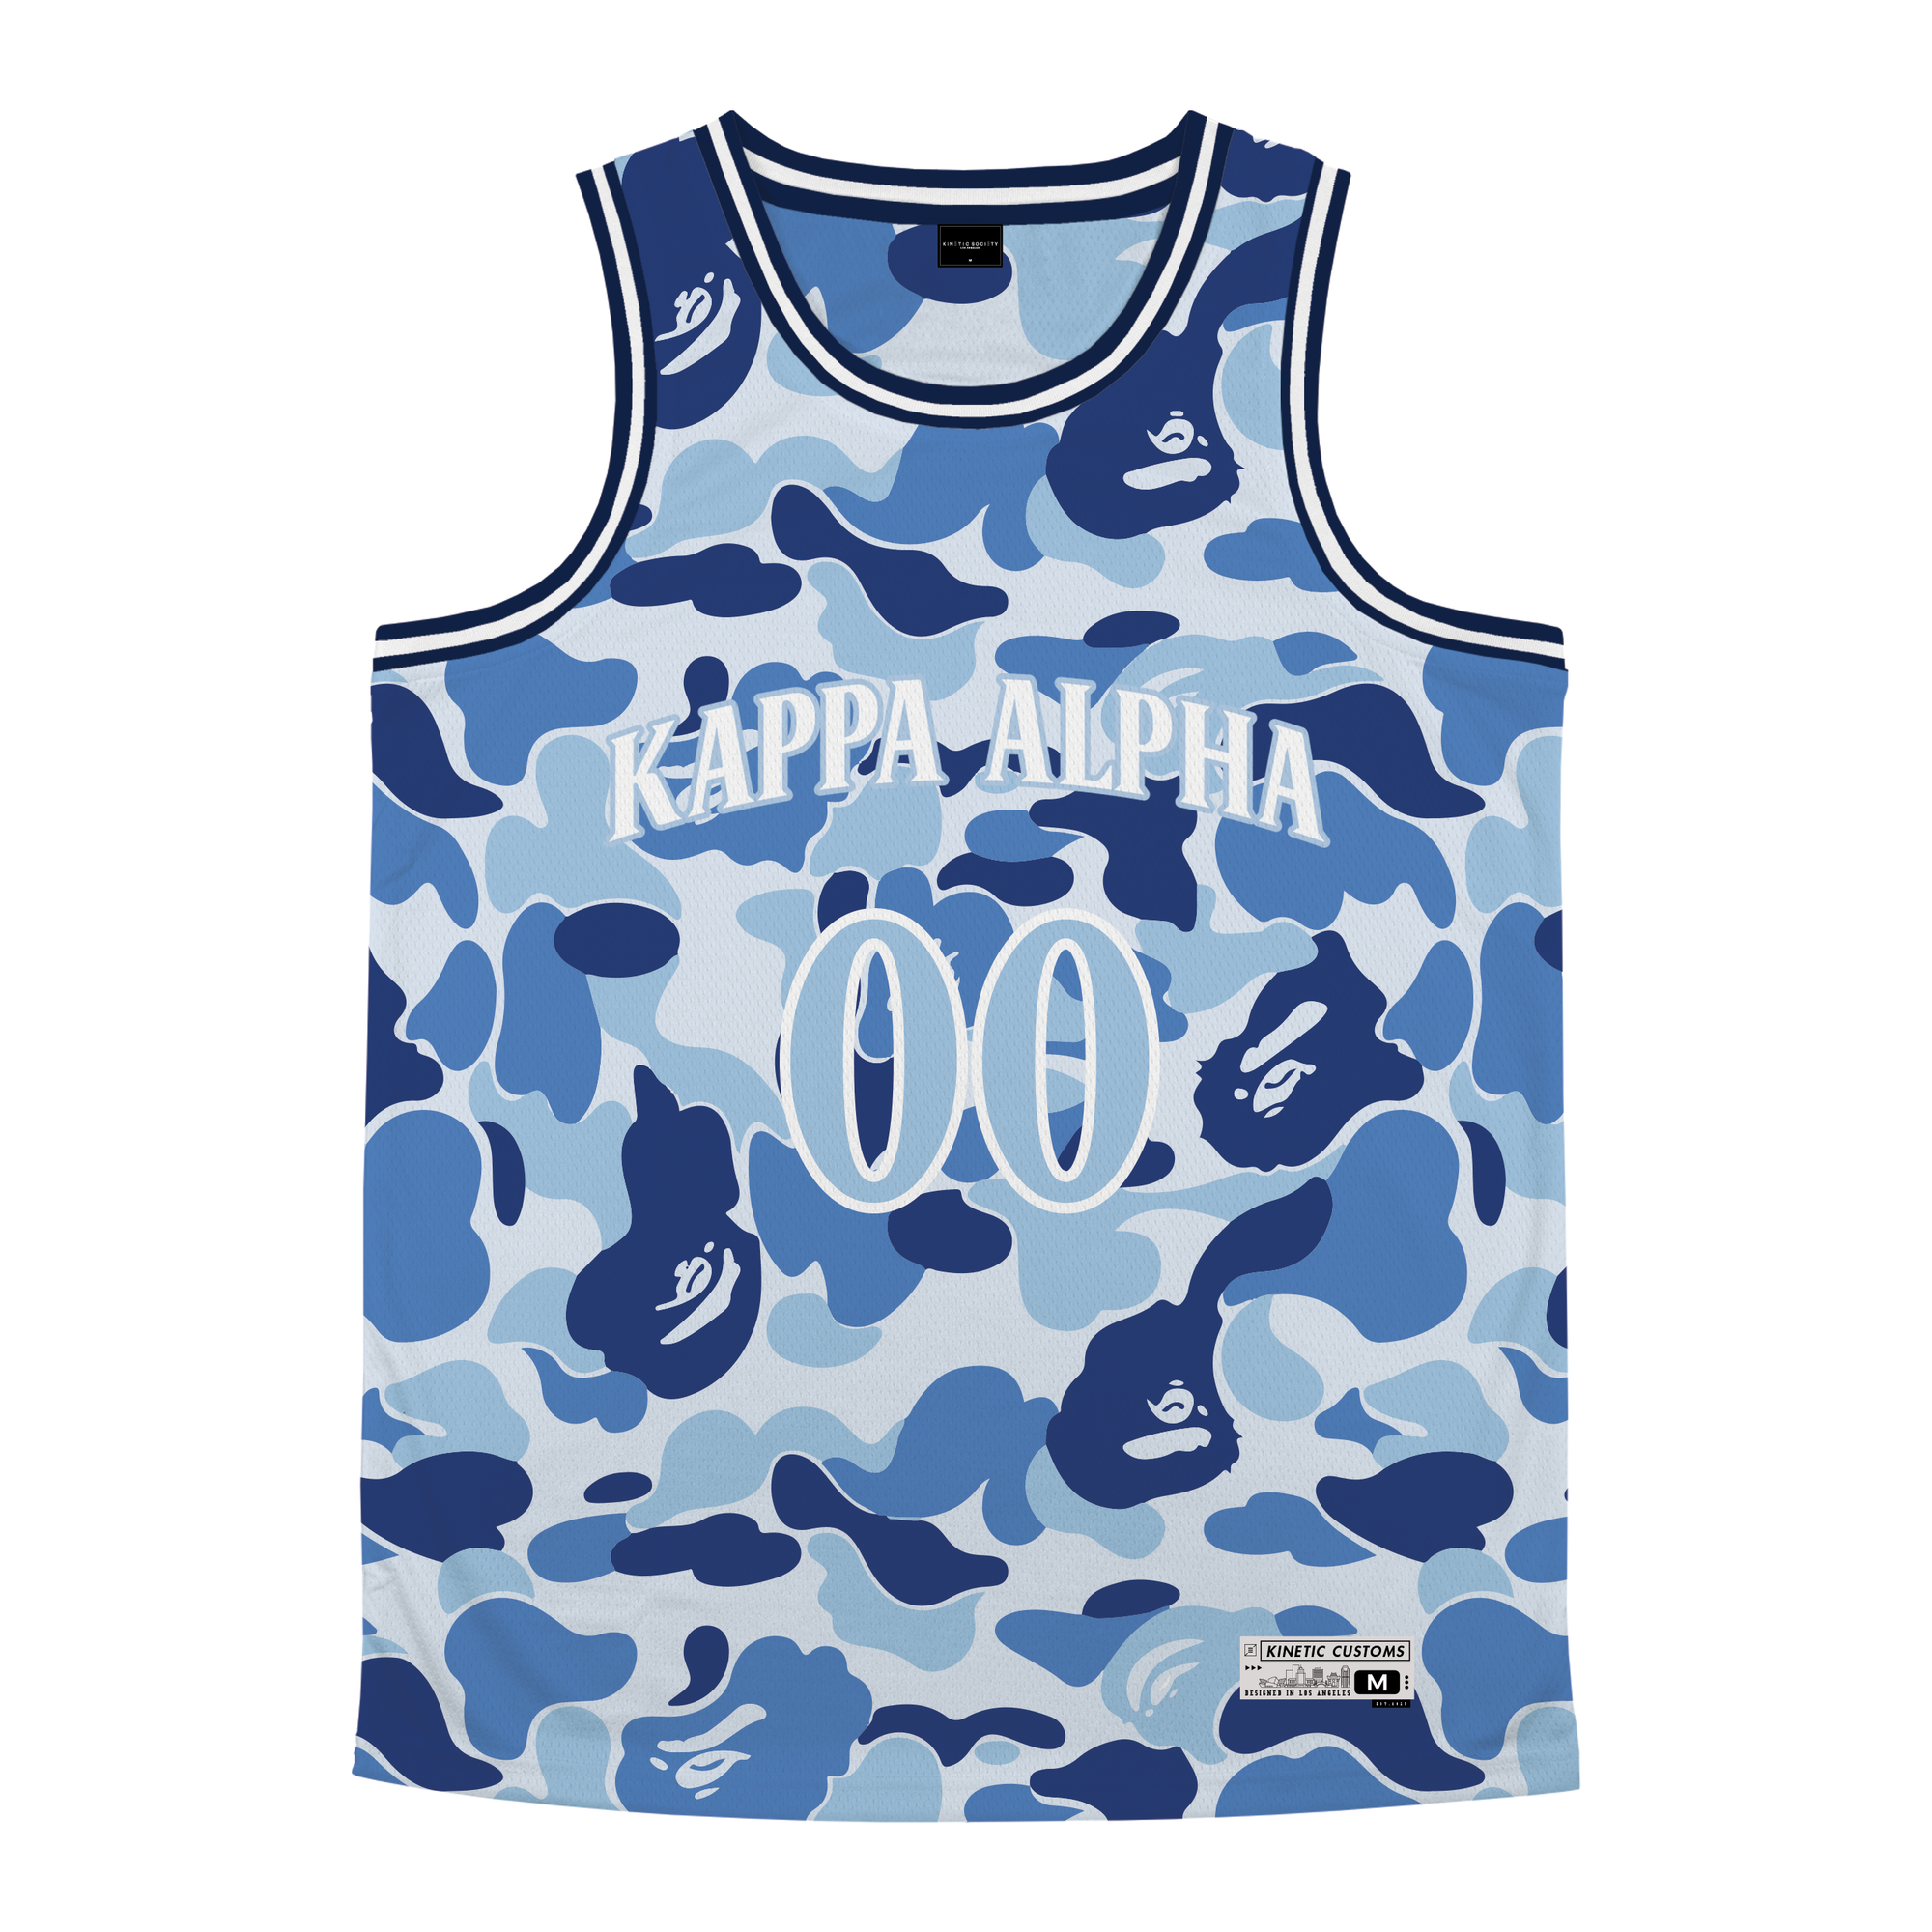 Kappa Alpha Order - Blue Camo Basketball Jersey